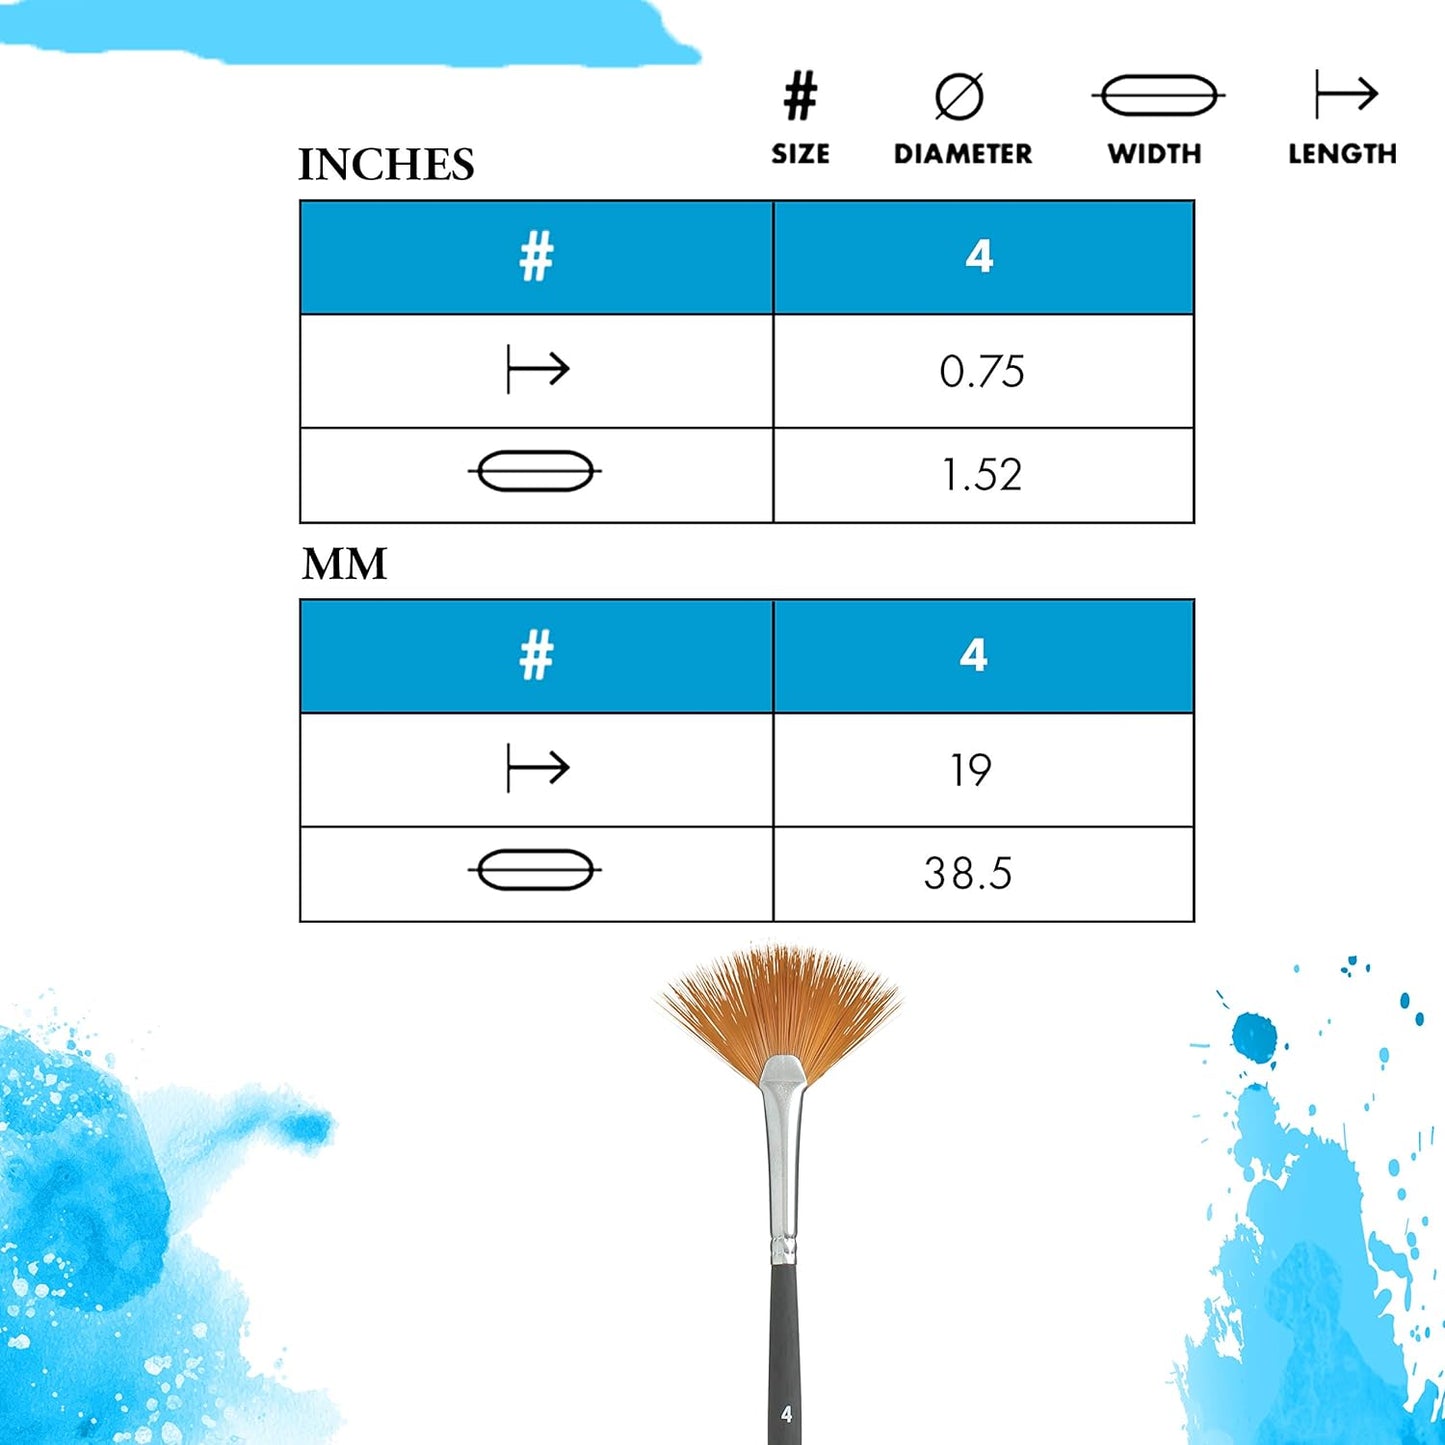 Aqua Elite Paintbrush, Size 4, Matte Black